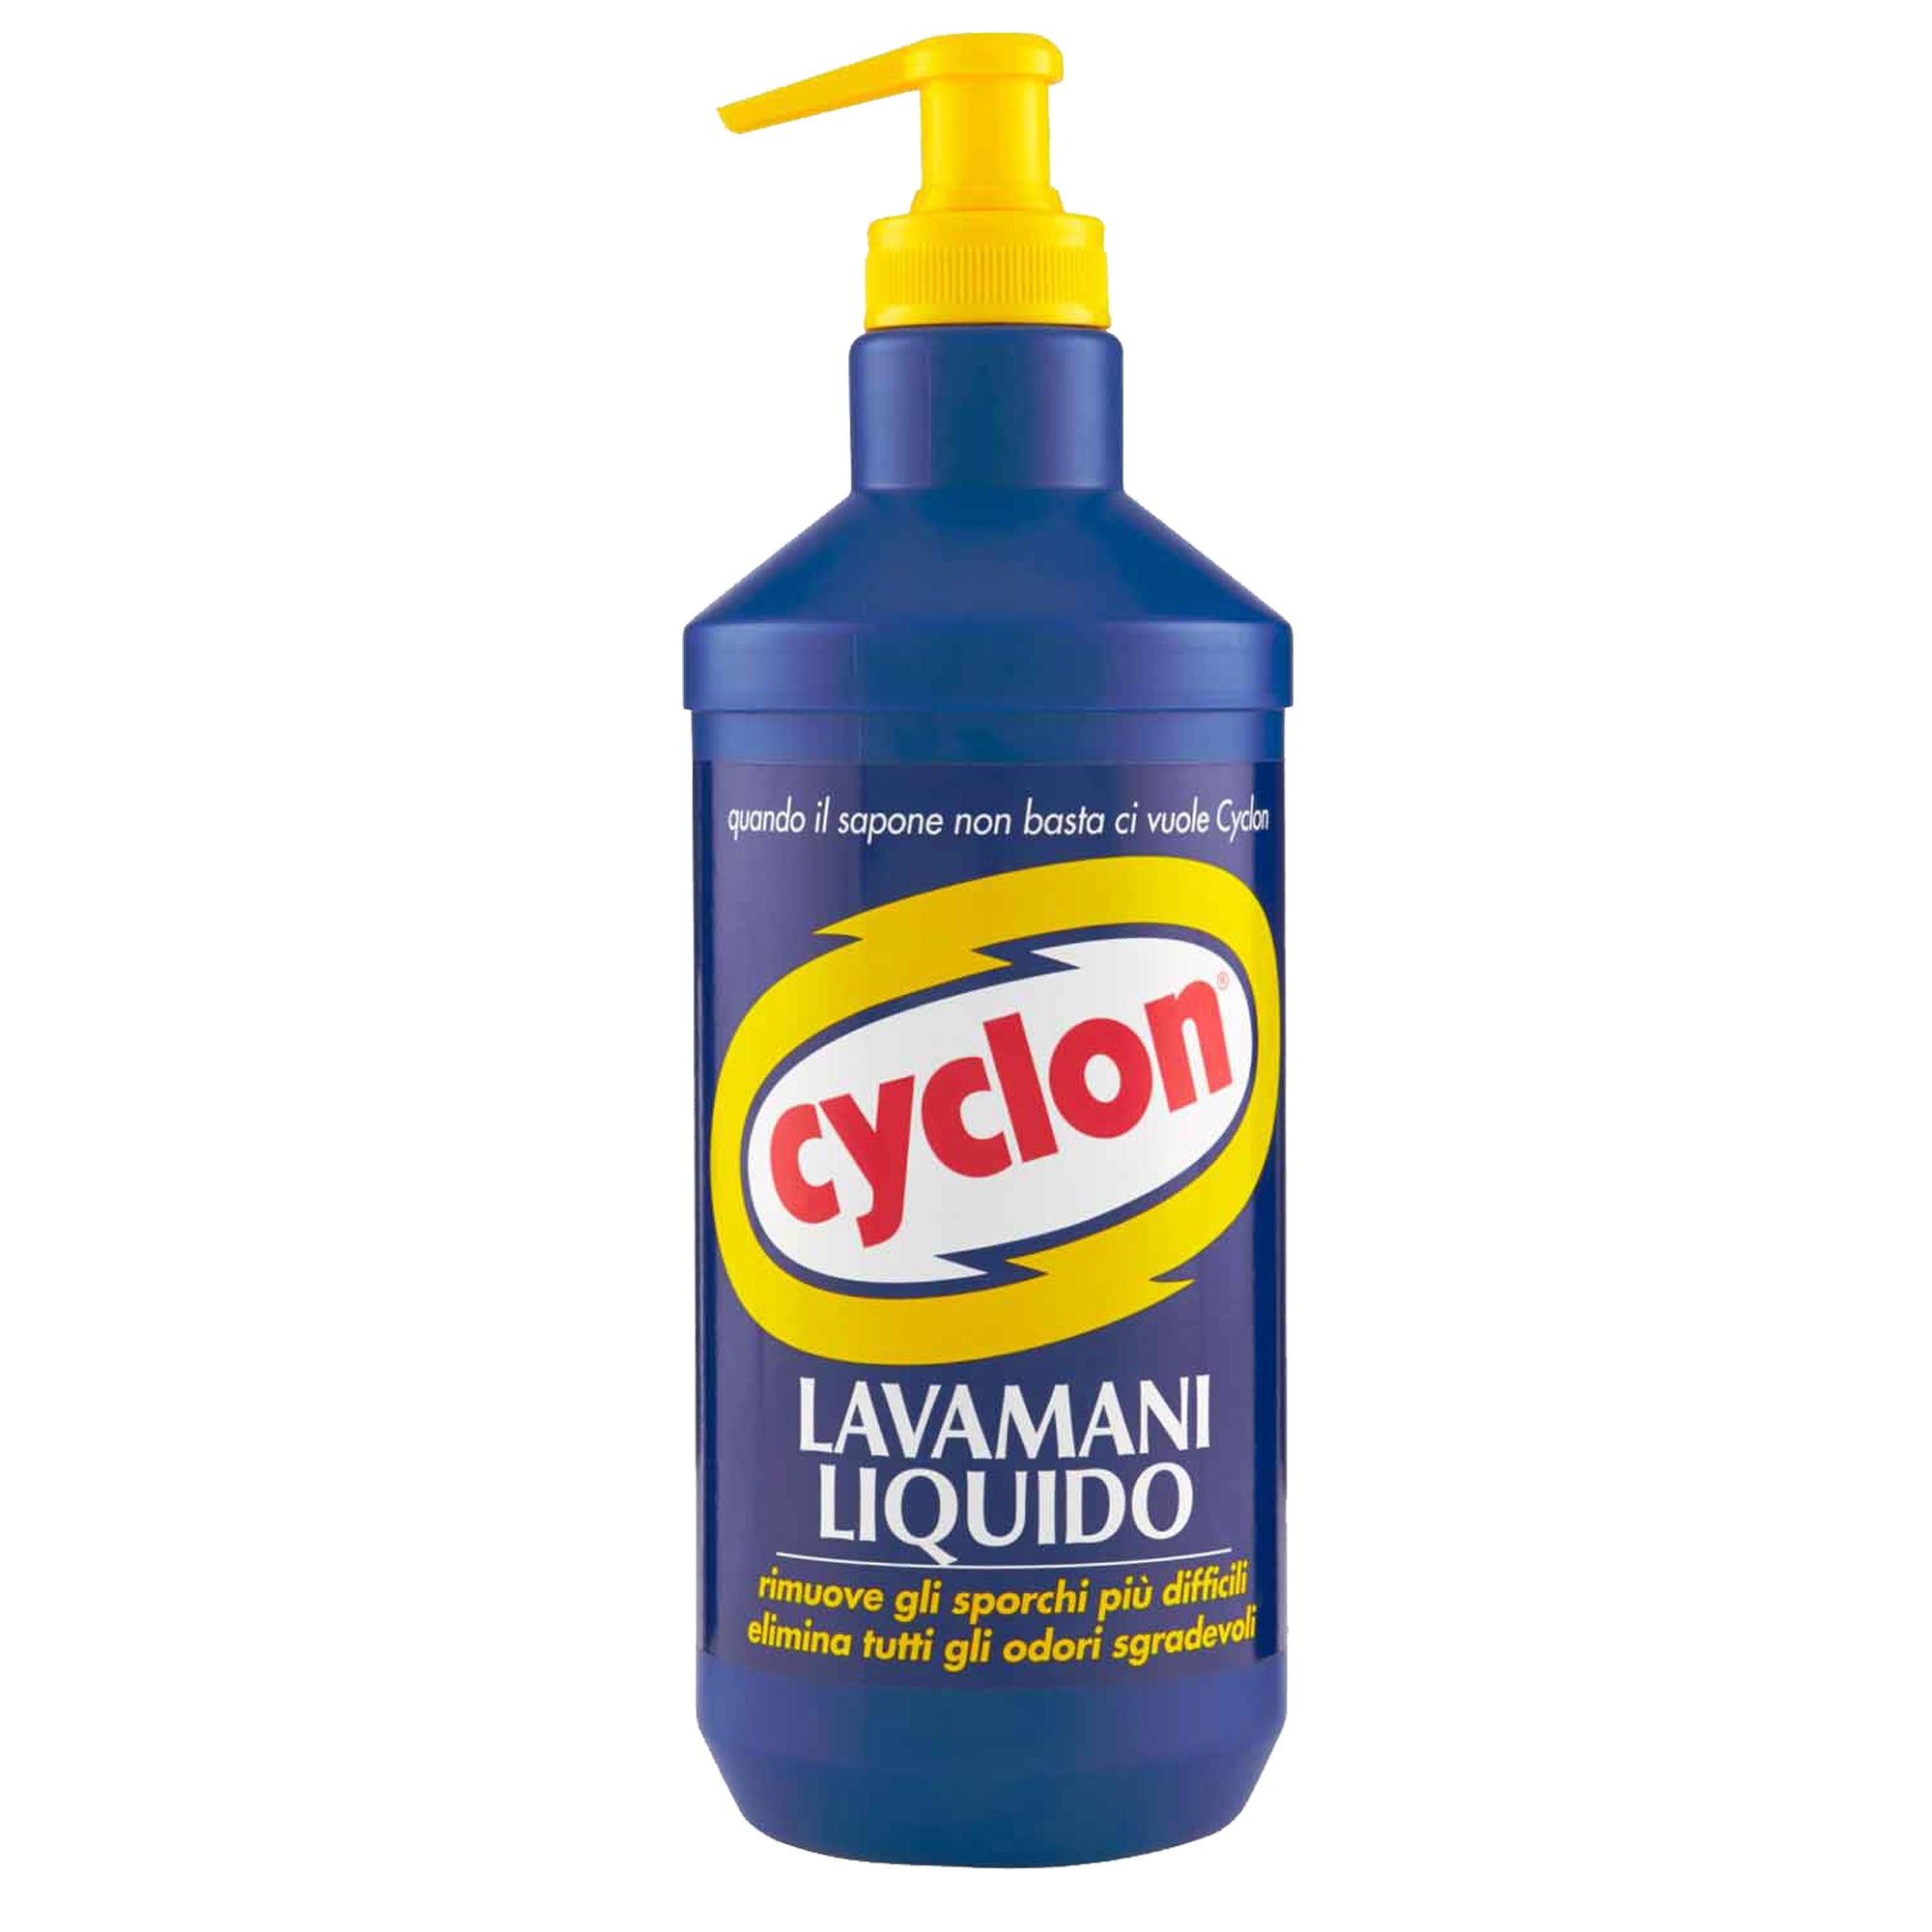 cyclon-lavamani-liquido-500ml